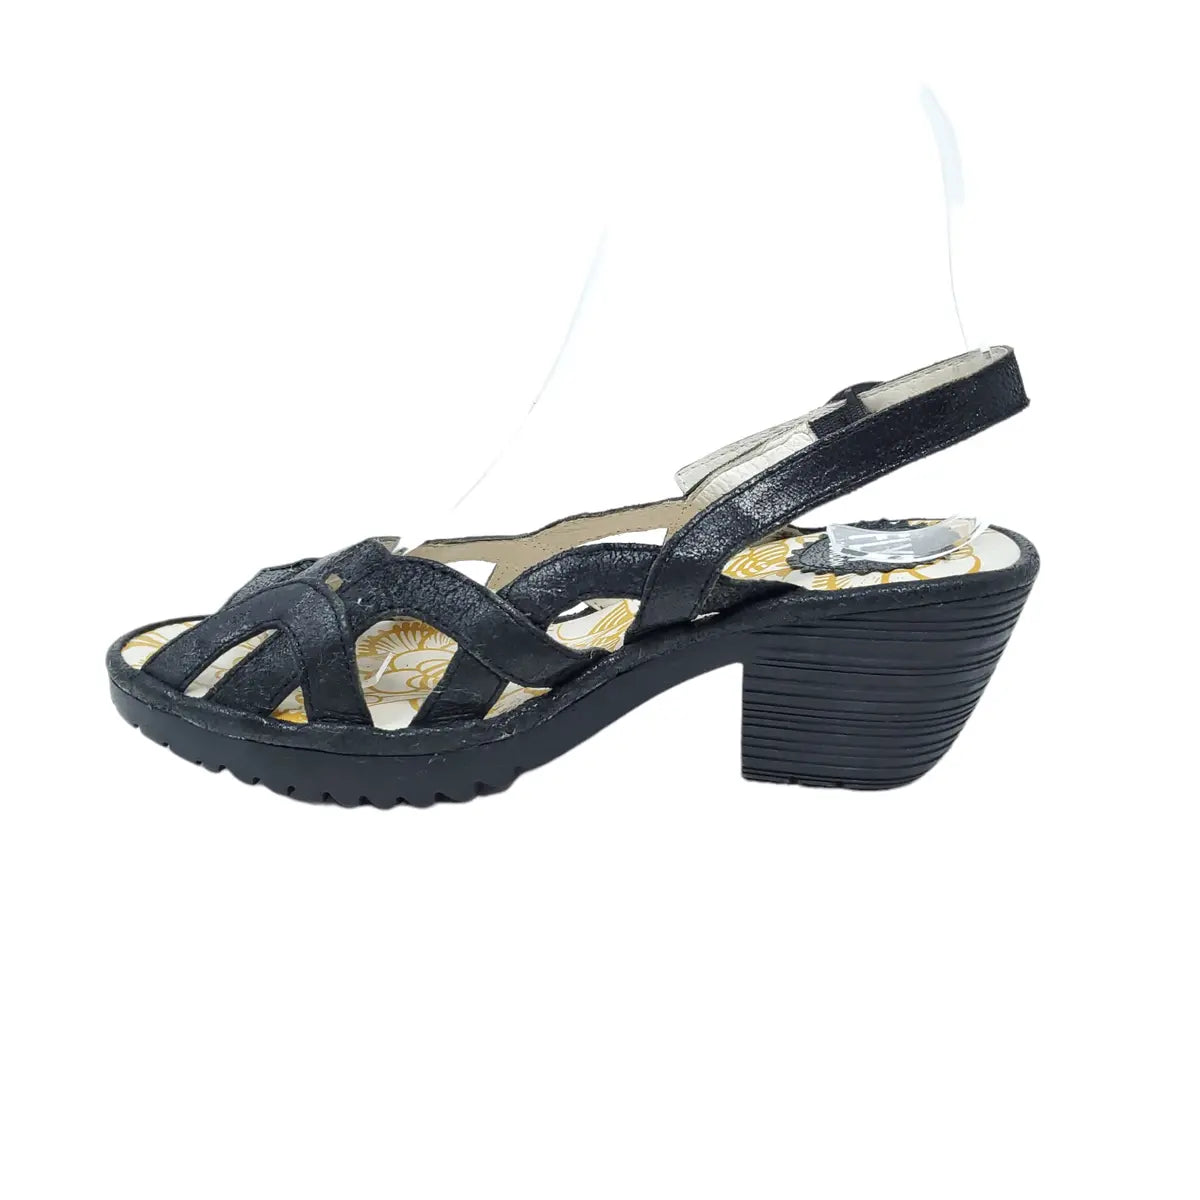 WEZA BLACK | FLY London Black Luxor Weza Leather Sandals Womens WEZA961BLK-Brandy